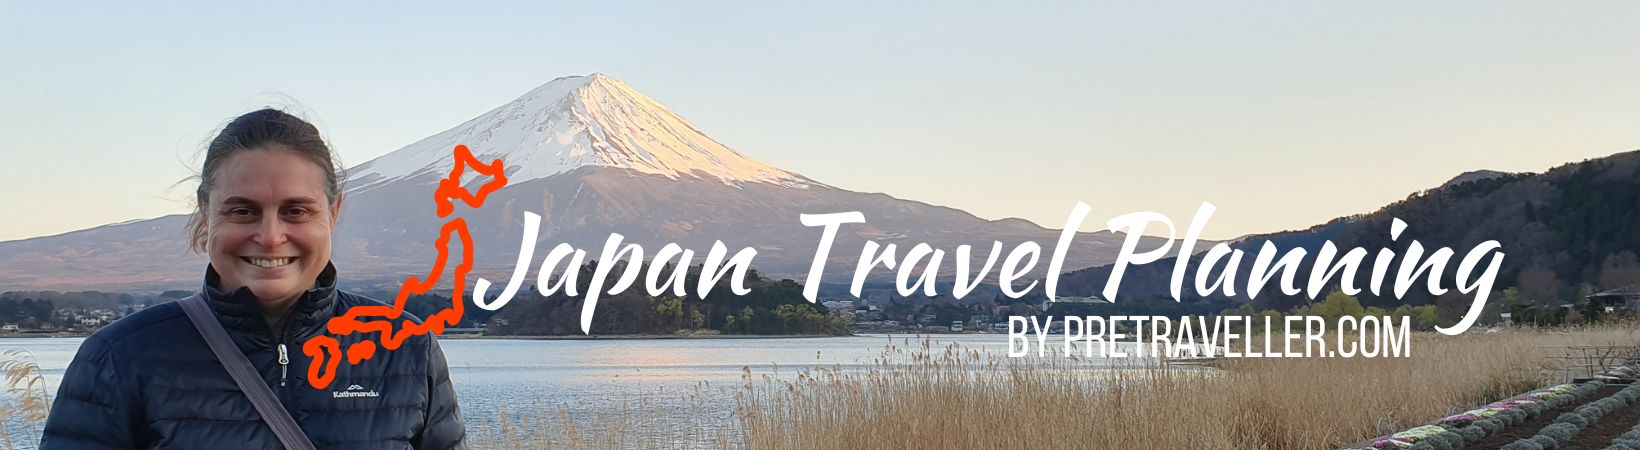 Japan Travel Planning Facebook Group